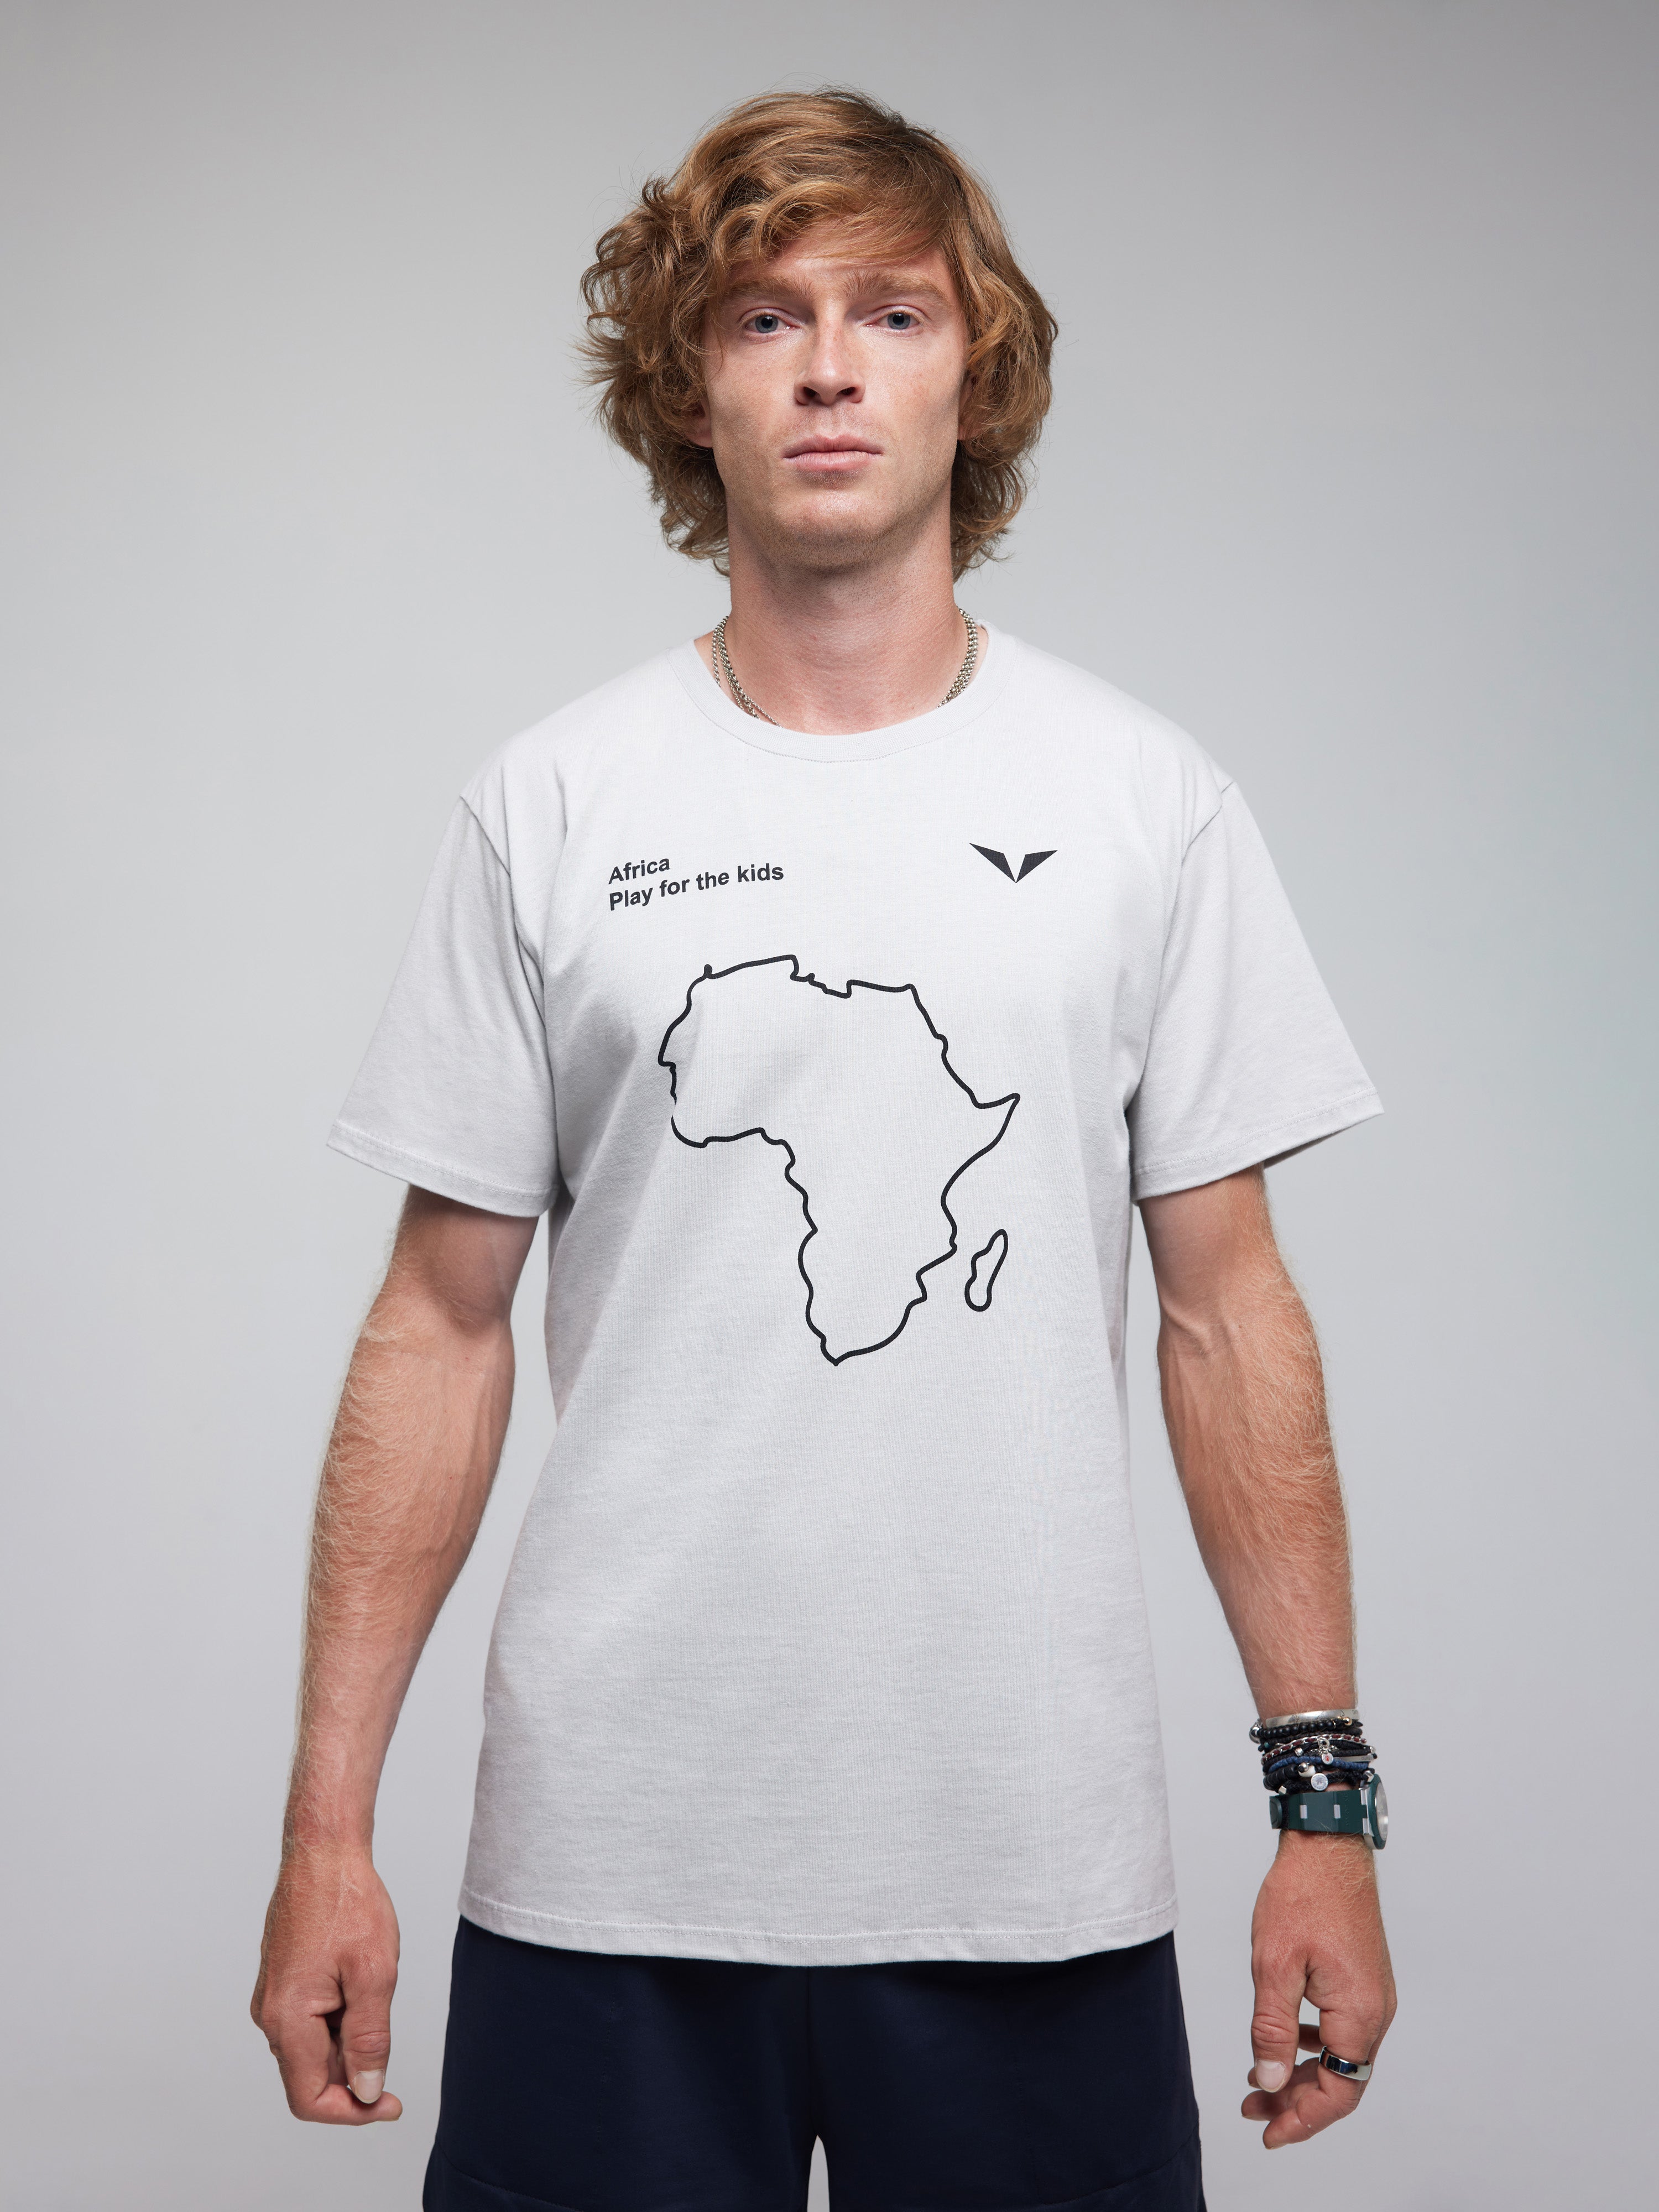 Africa Practice Shirt